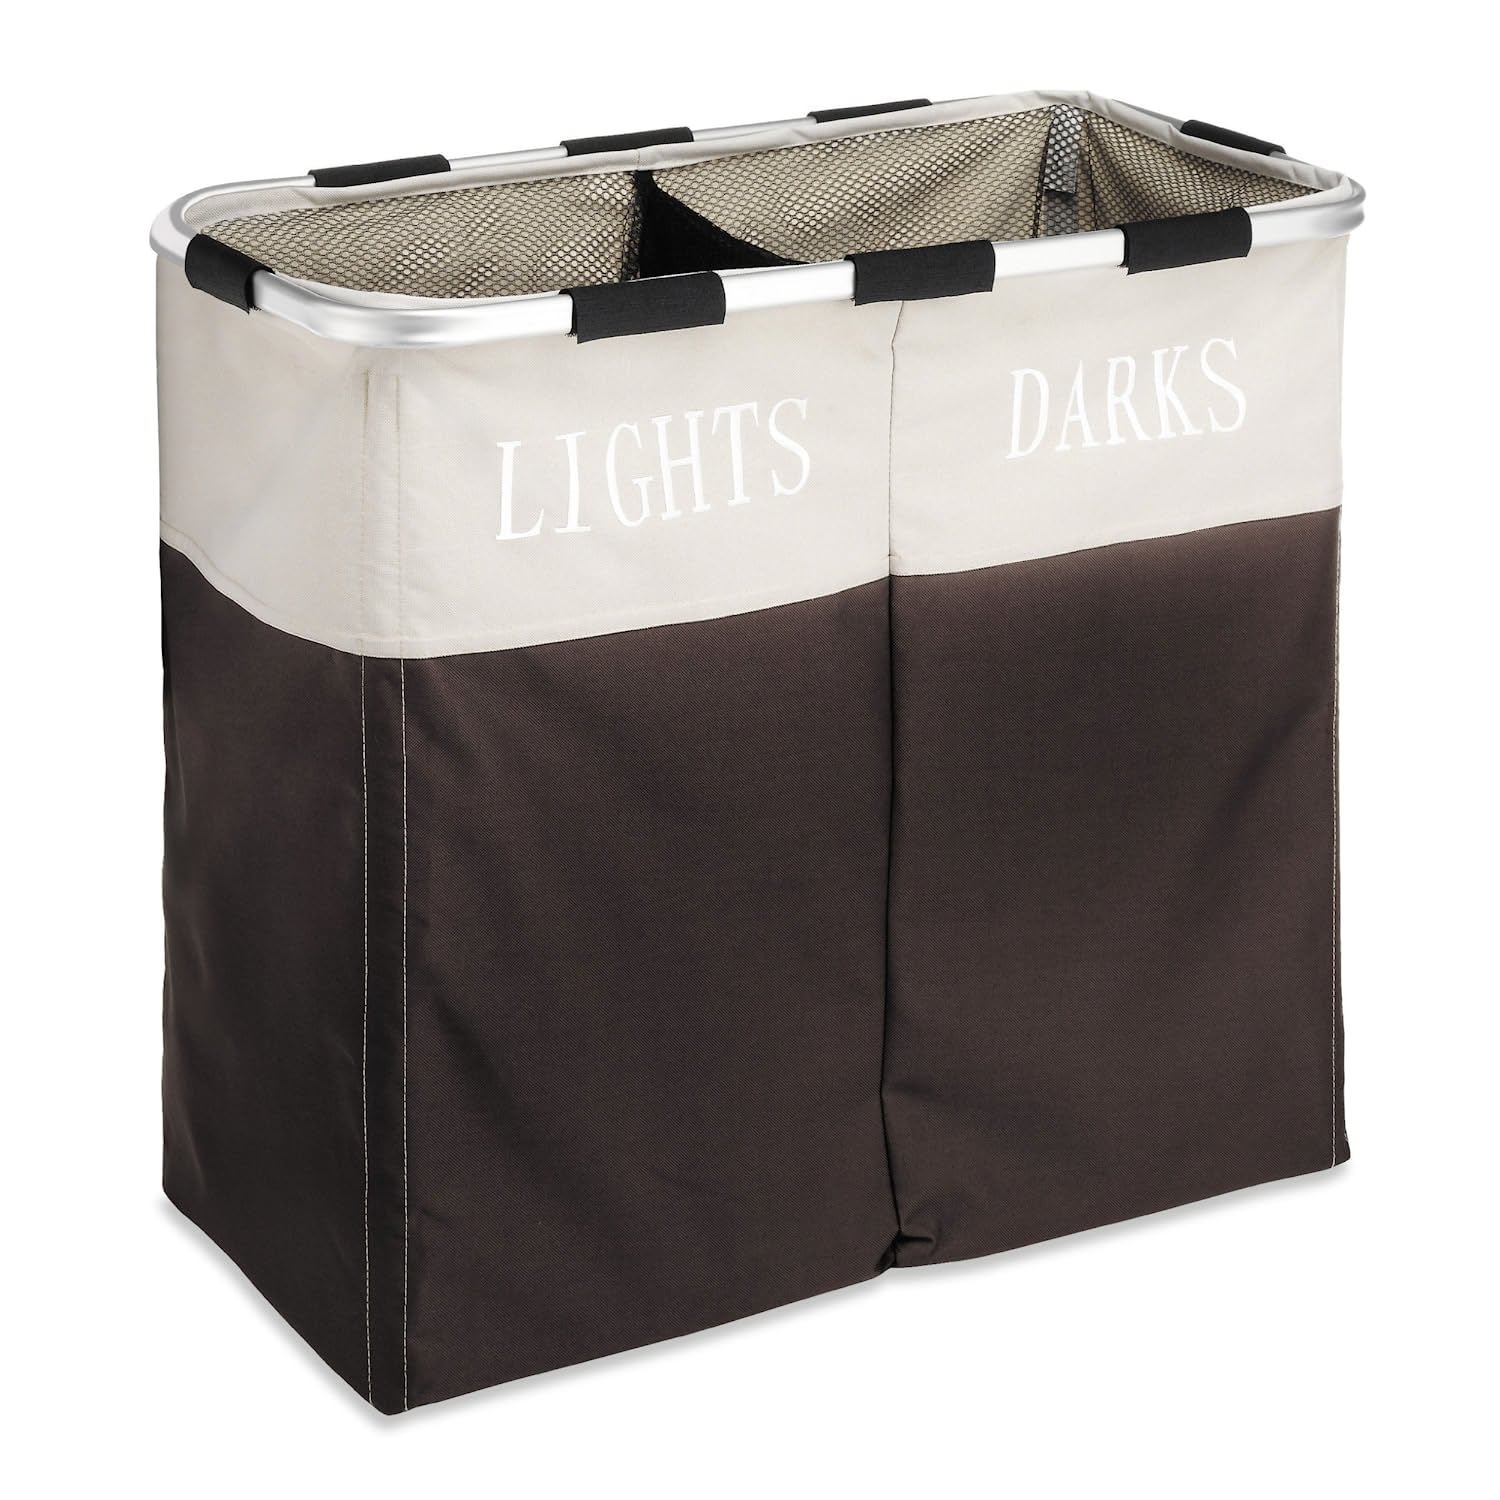 Whitmor Easycare Double Laundry Hamper - Lights and Darks Separator - Espresso